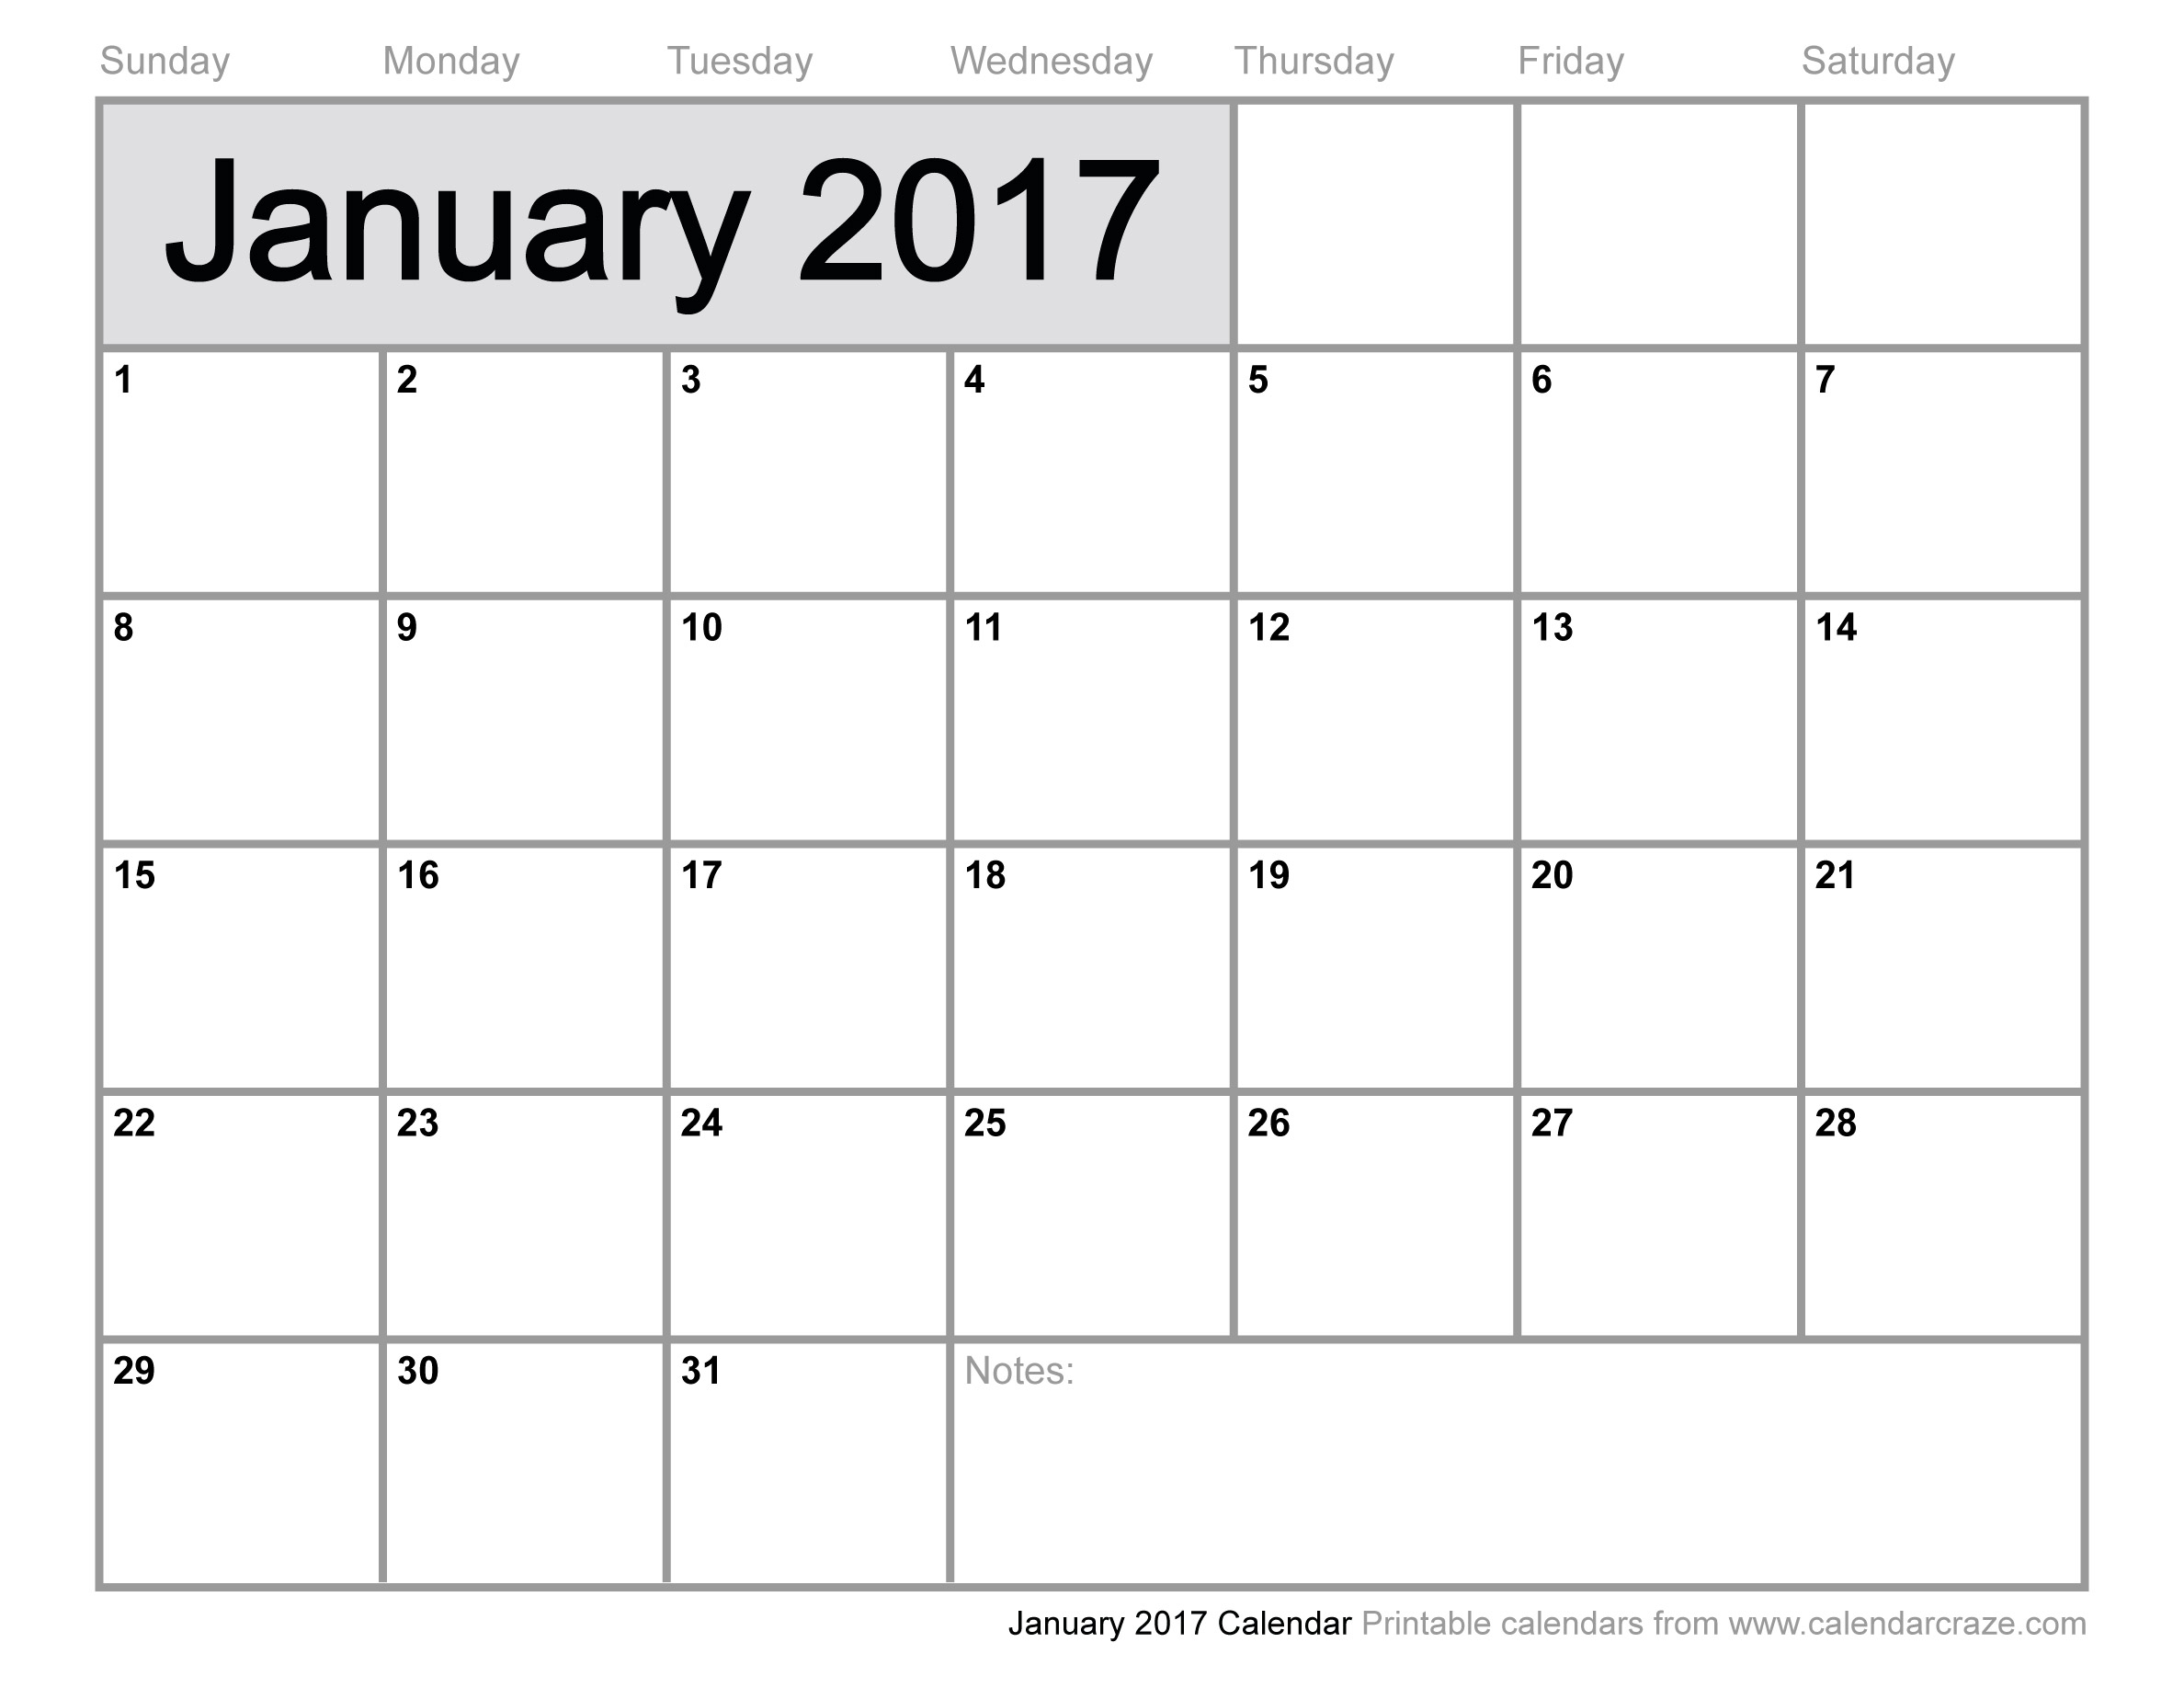 Download January 2017 calendar printable